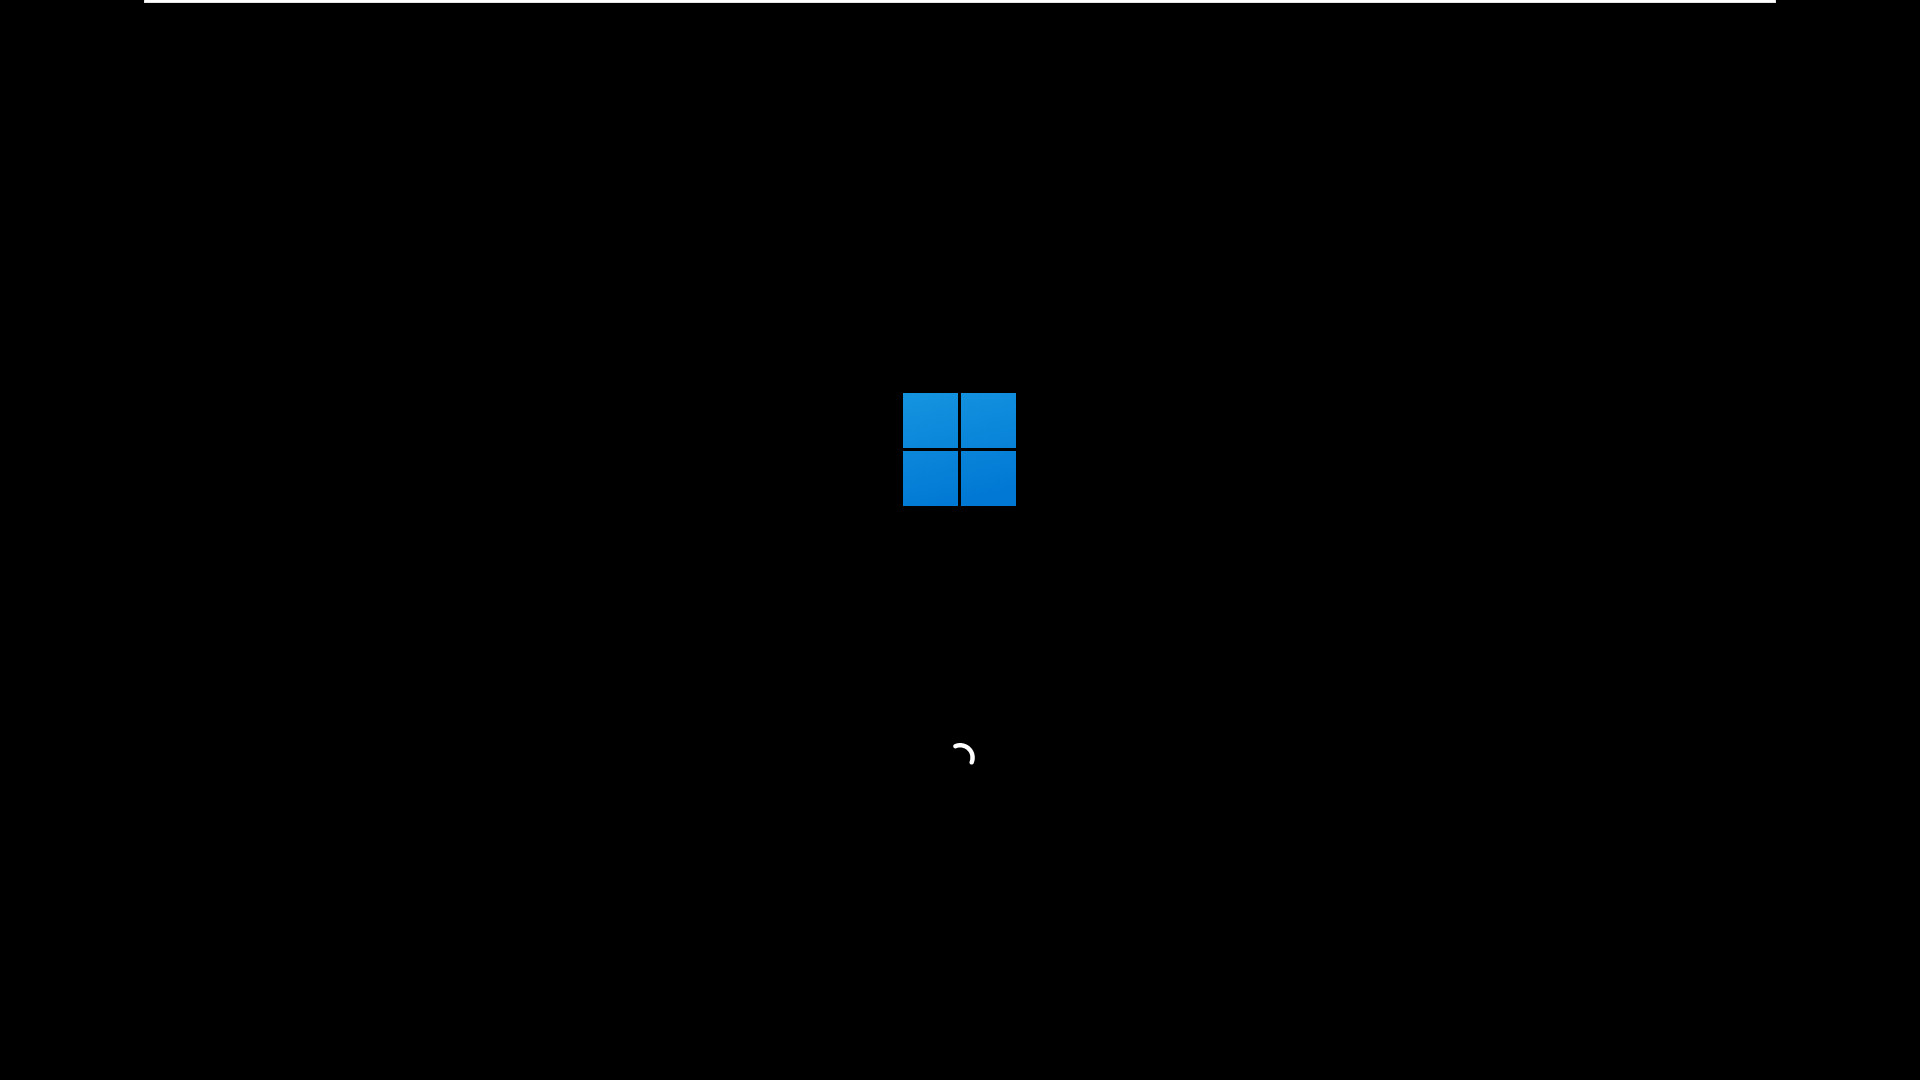 Windows 11 개발자 채널 - 버전 22H2 (OS 빌드 22610.1) 나왔네요 (인사이더 프리뷰) - 평가본 만료 날짜X 워터마크X [최초기록] - vmware에 설치 2022-04-30_051826.jpg